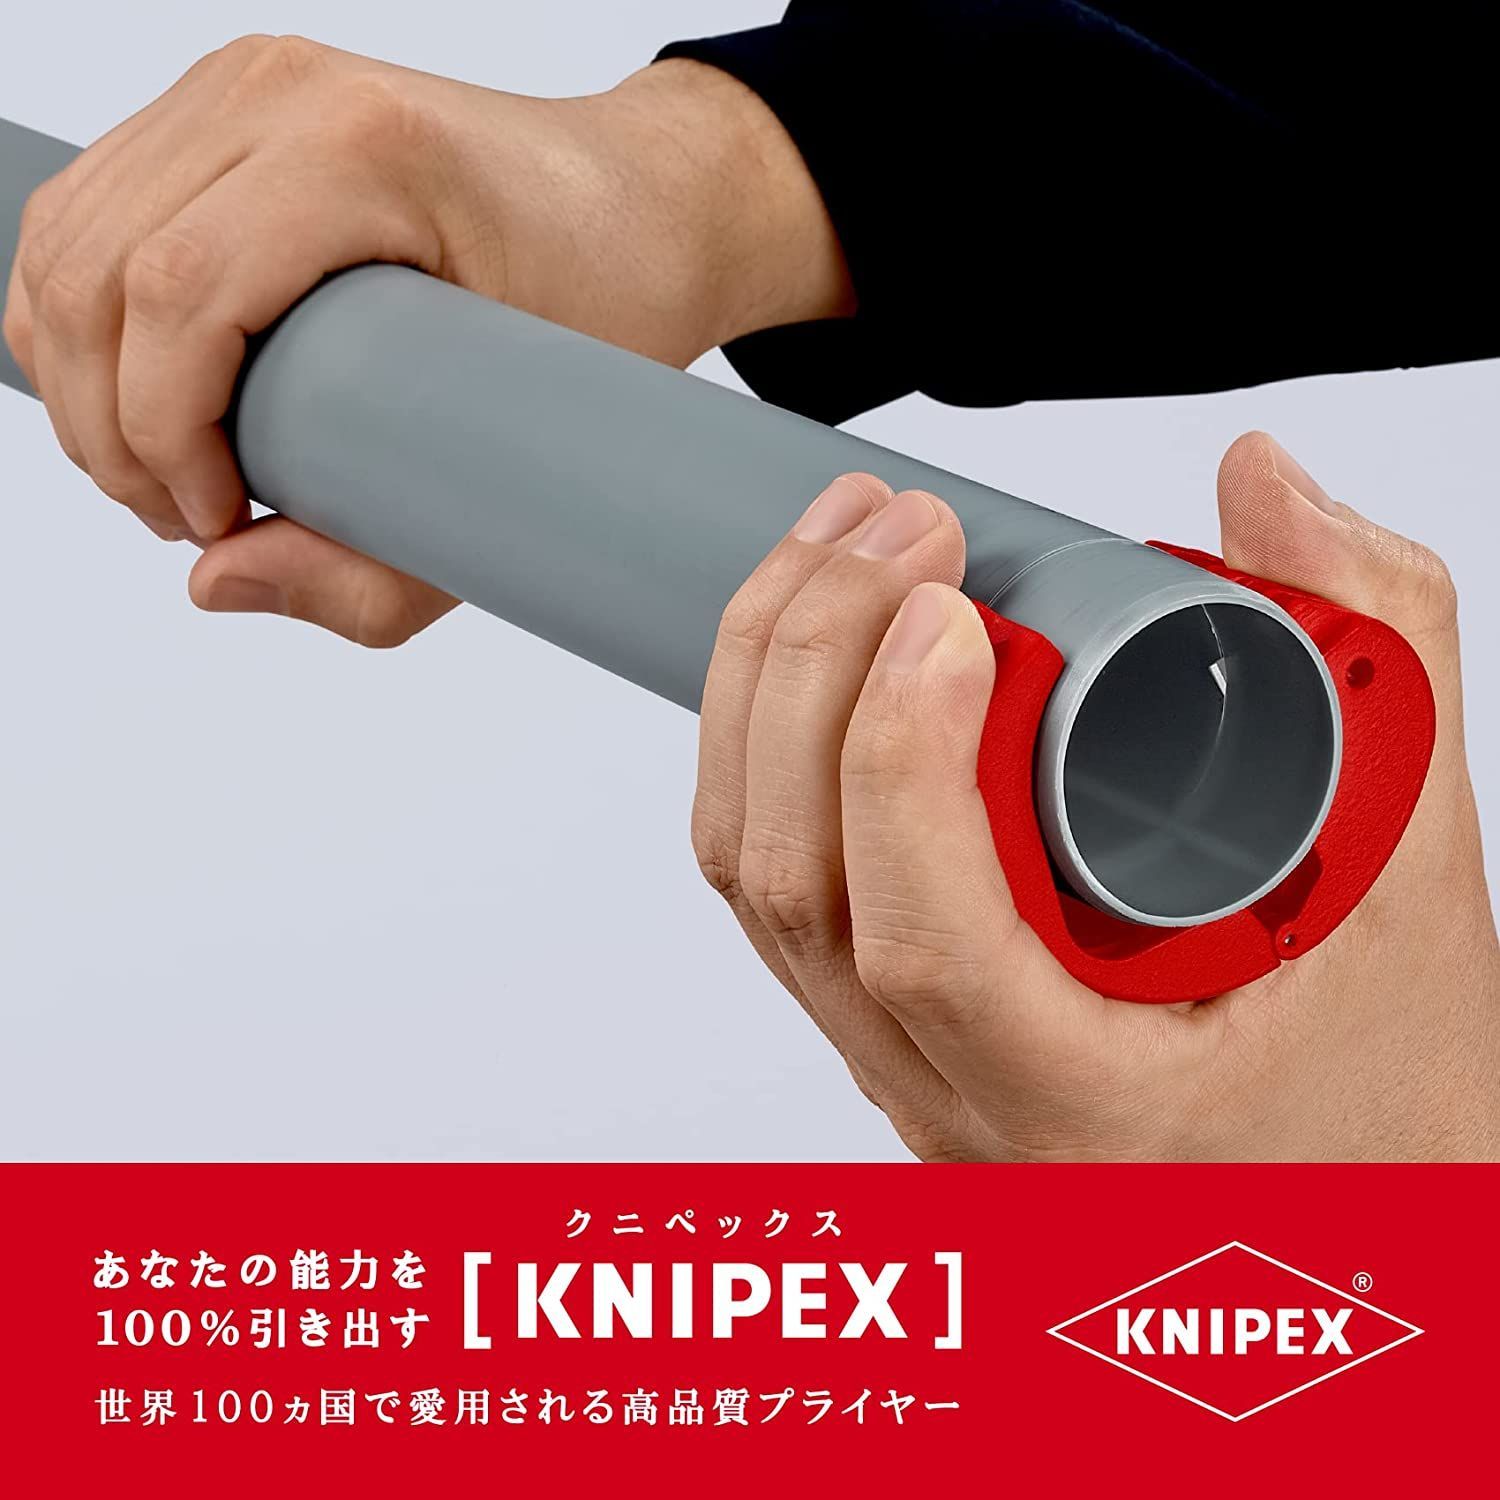 WEB正規販売店 【新品】KNIPEX クニペックス パイプカッター 多層菅